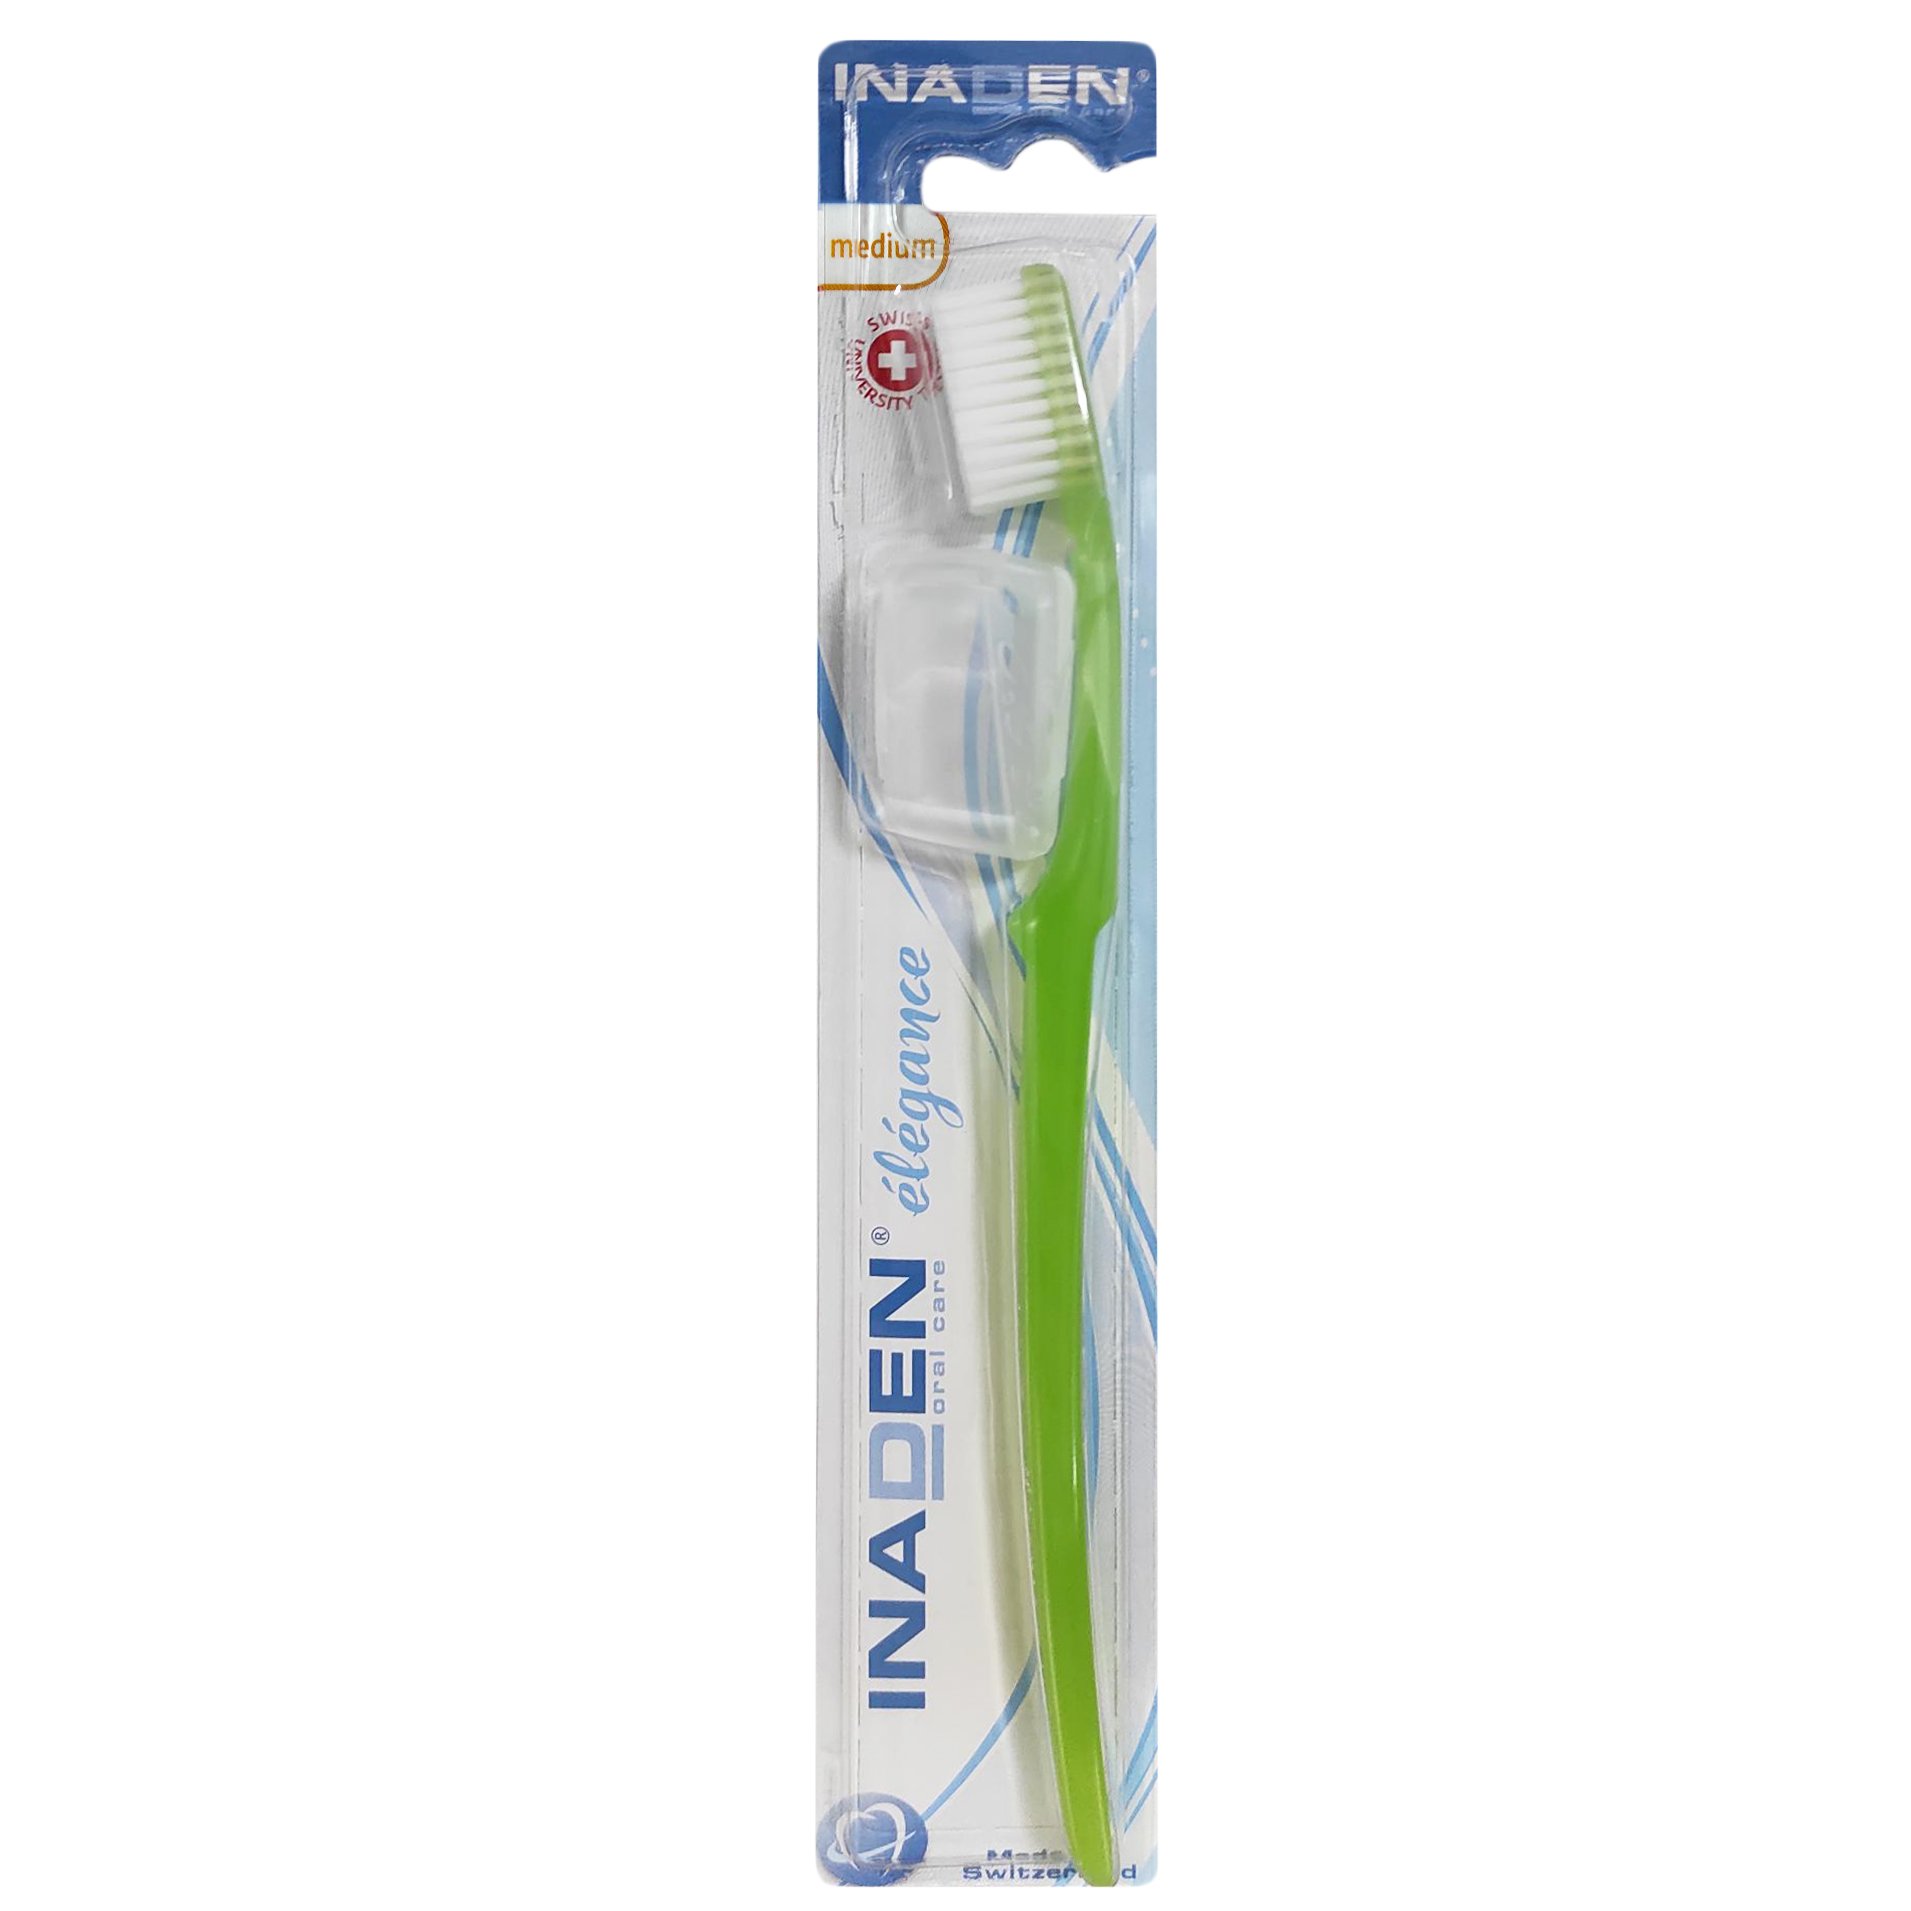 Inaden Elegance Medium Toothbrush Μέτρια Οδοντόβουρτσα για Βαθύ Καθαρισμό με Εργονομικό Σχήμα 1 Τεμάχιο – Πράσινο